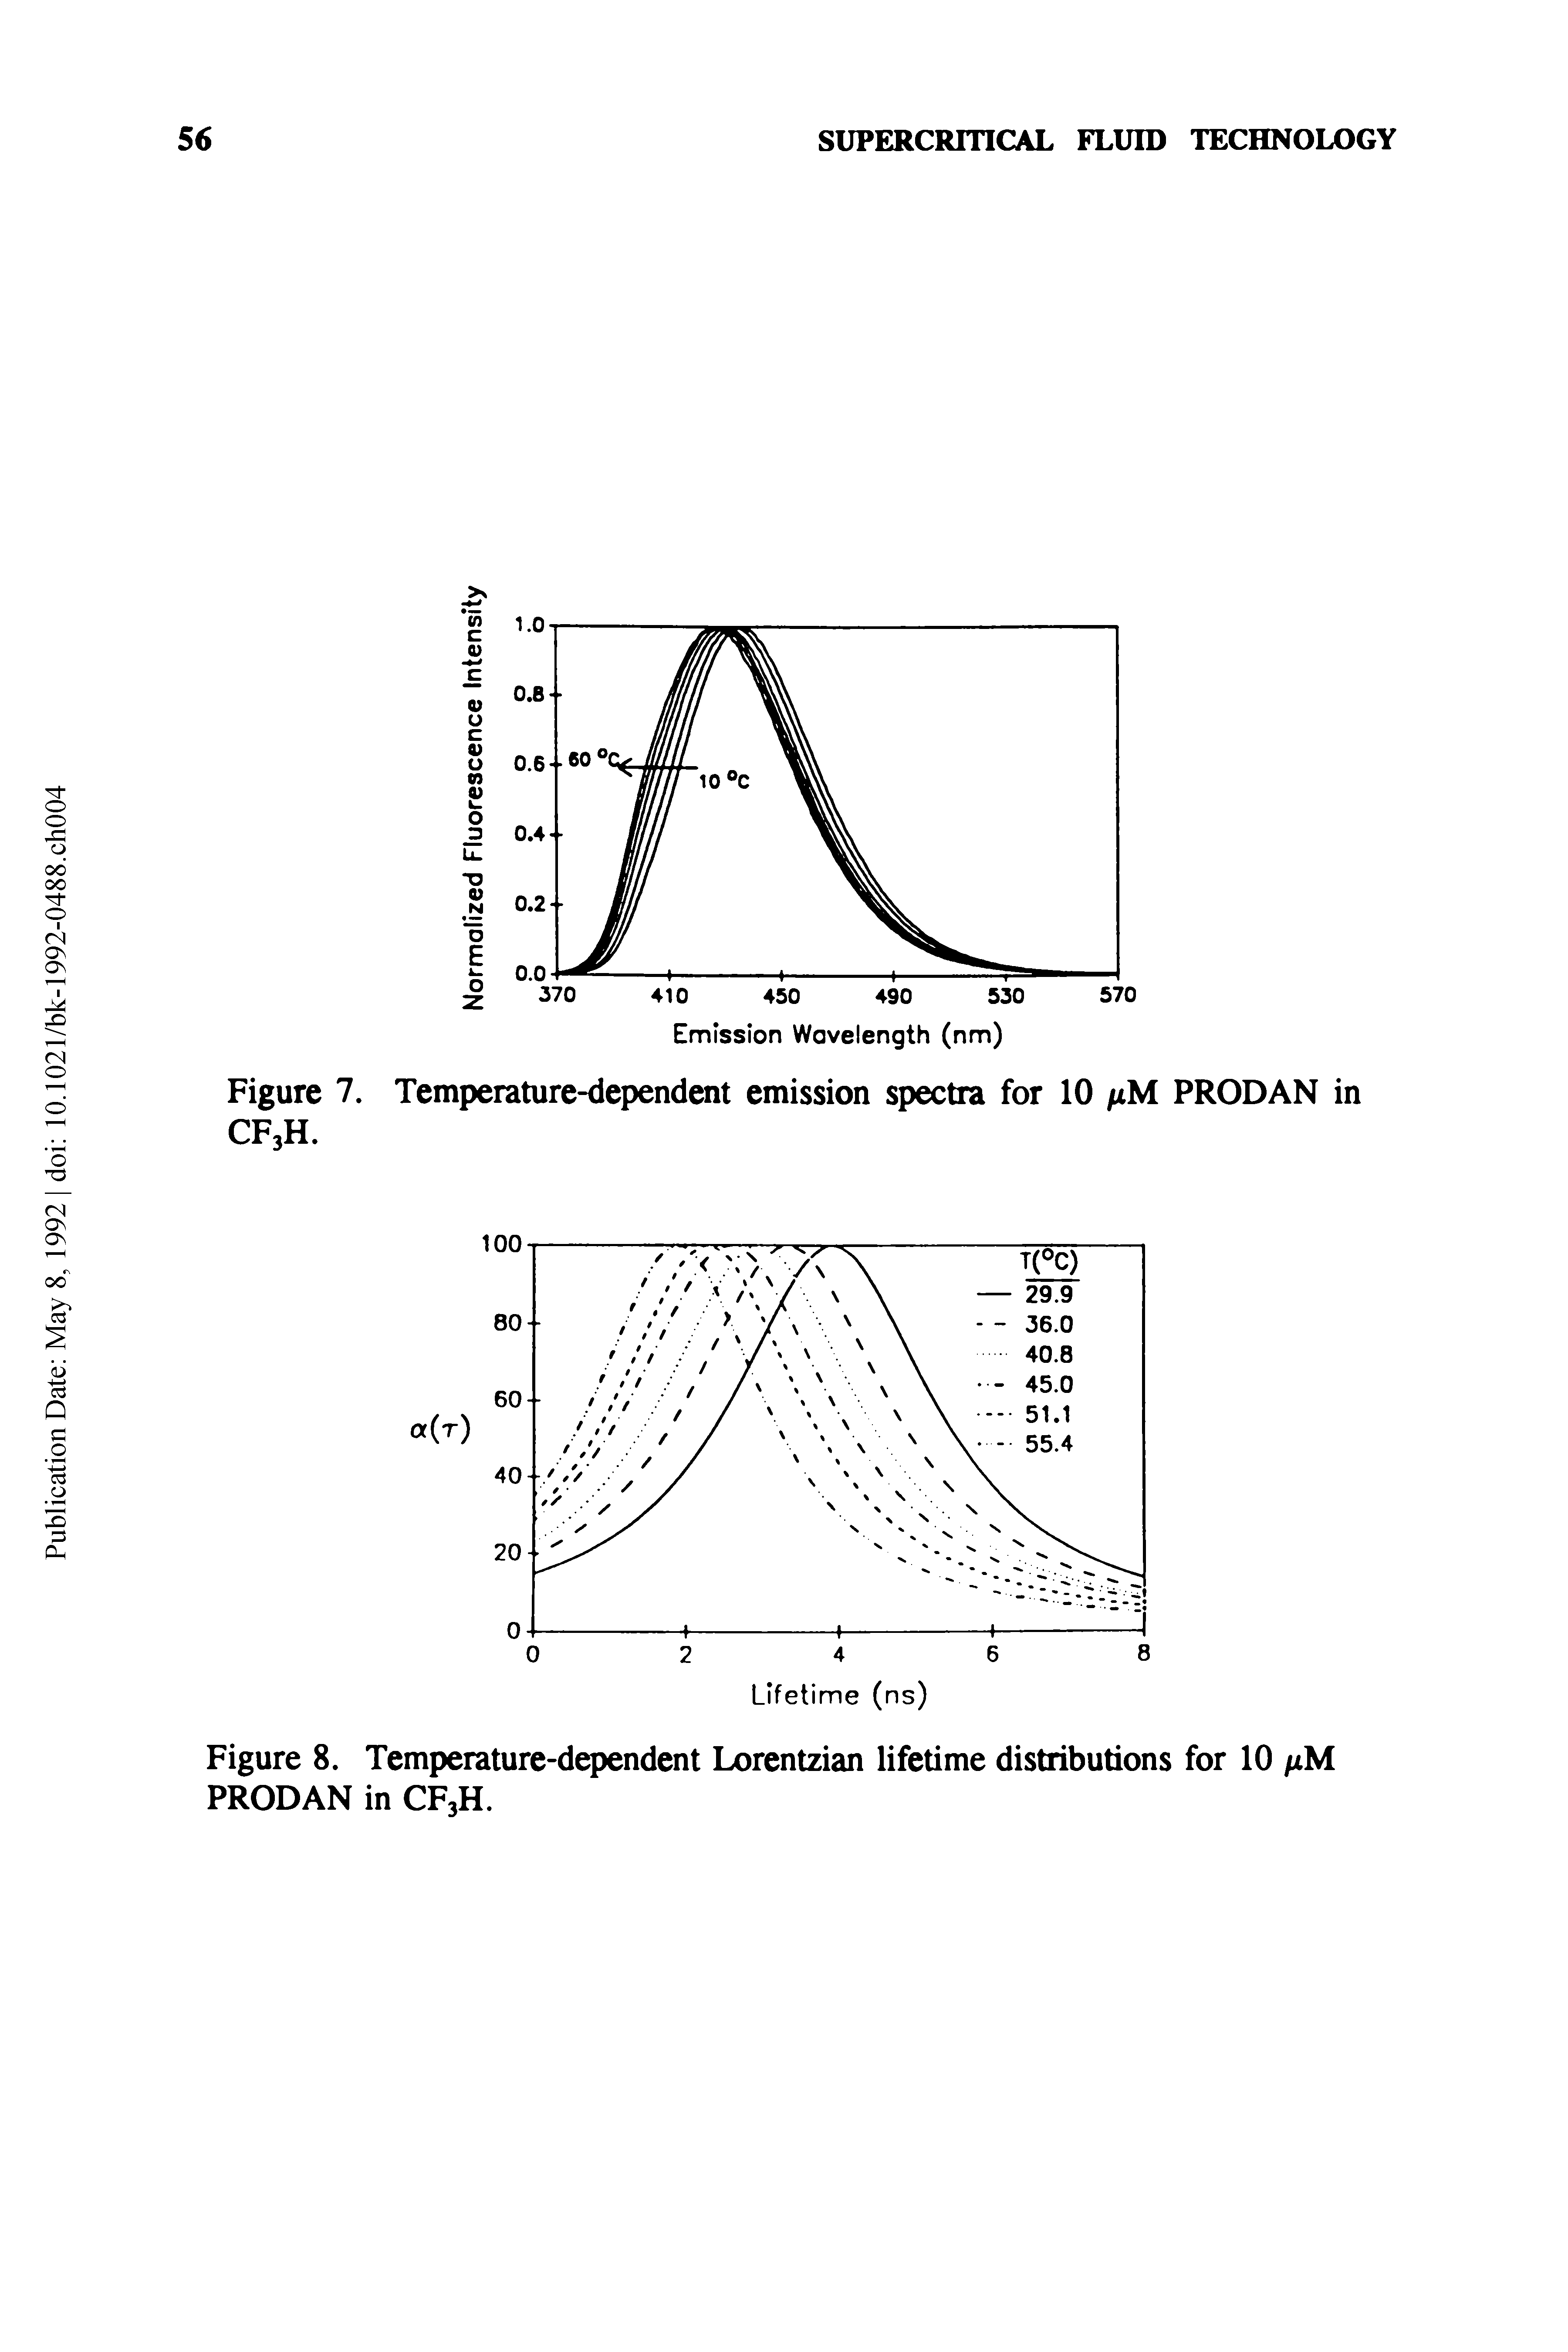 Figure 7. Temperature-dependent emission spectra for 10 /xM PRODAN in CF3H.